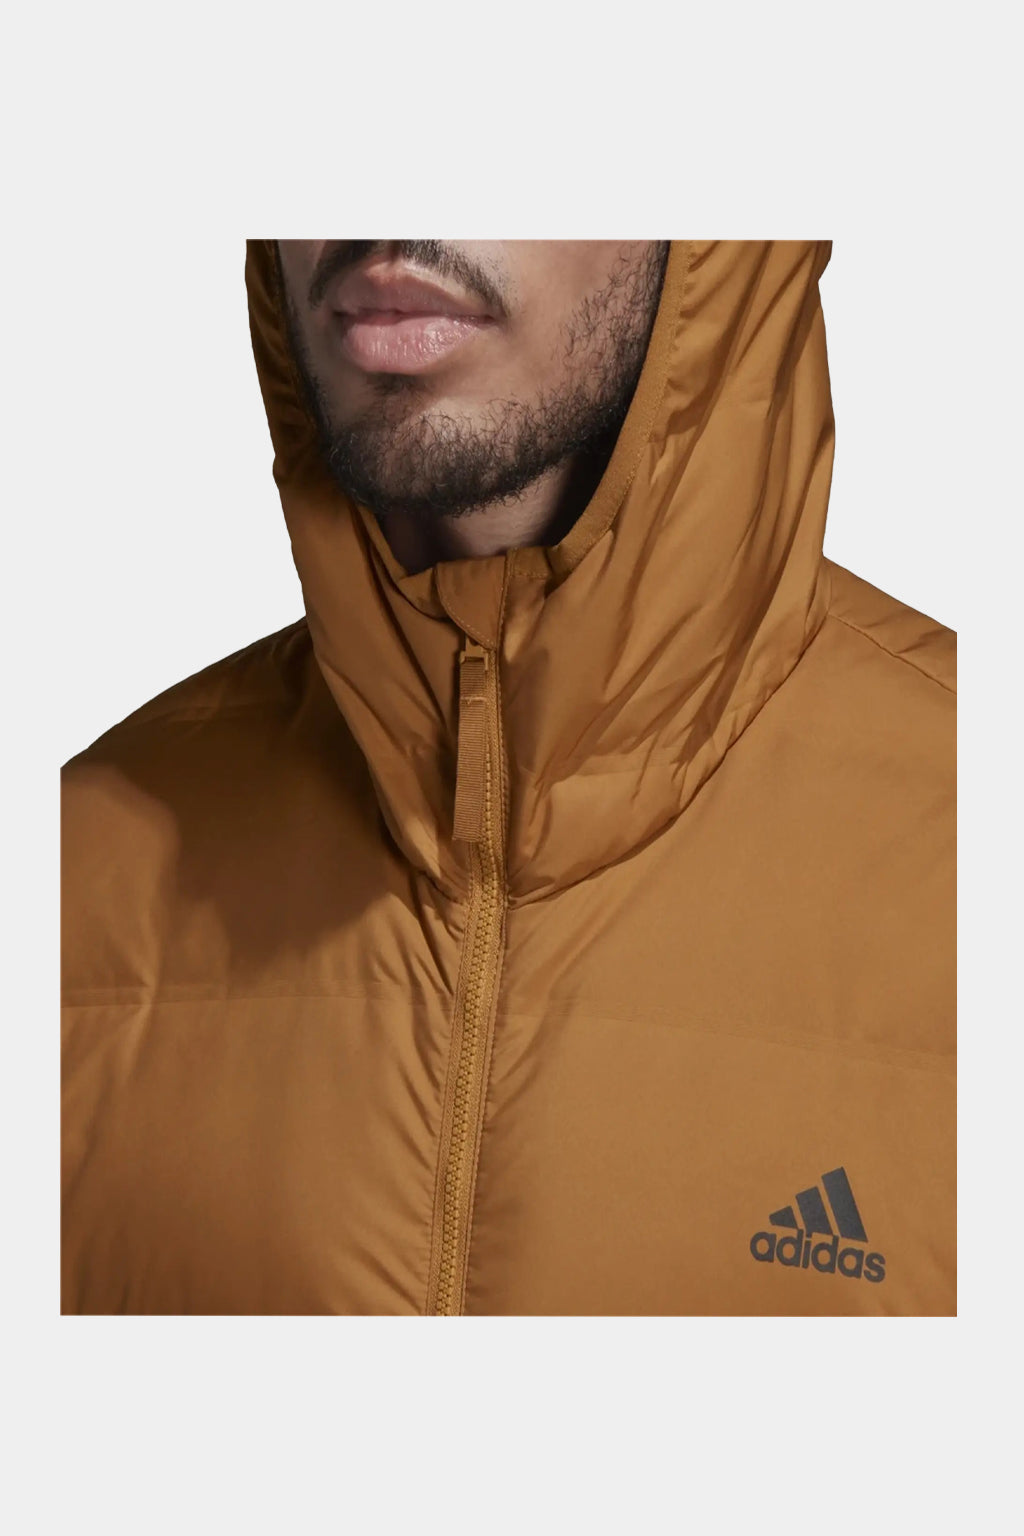 Adidas - Helionic Hooded Down Jacket